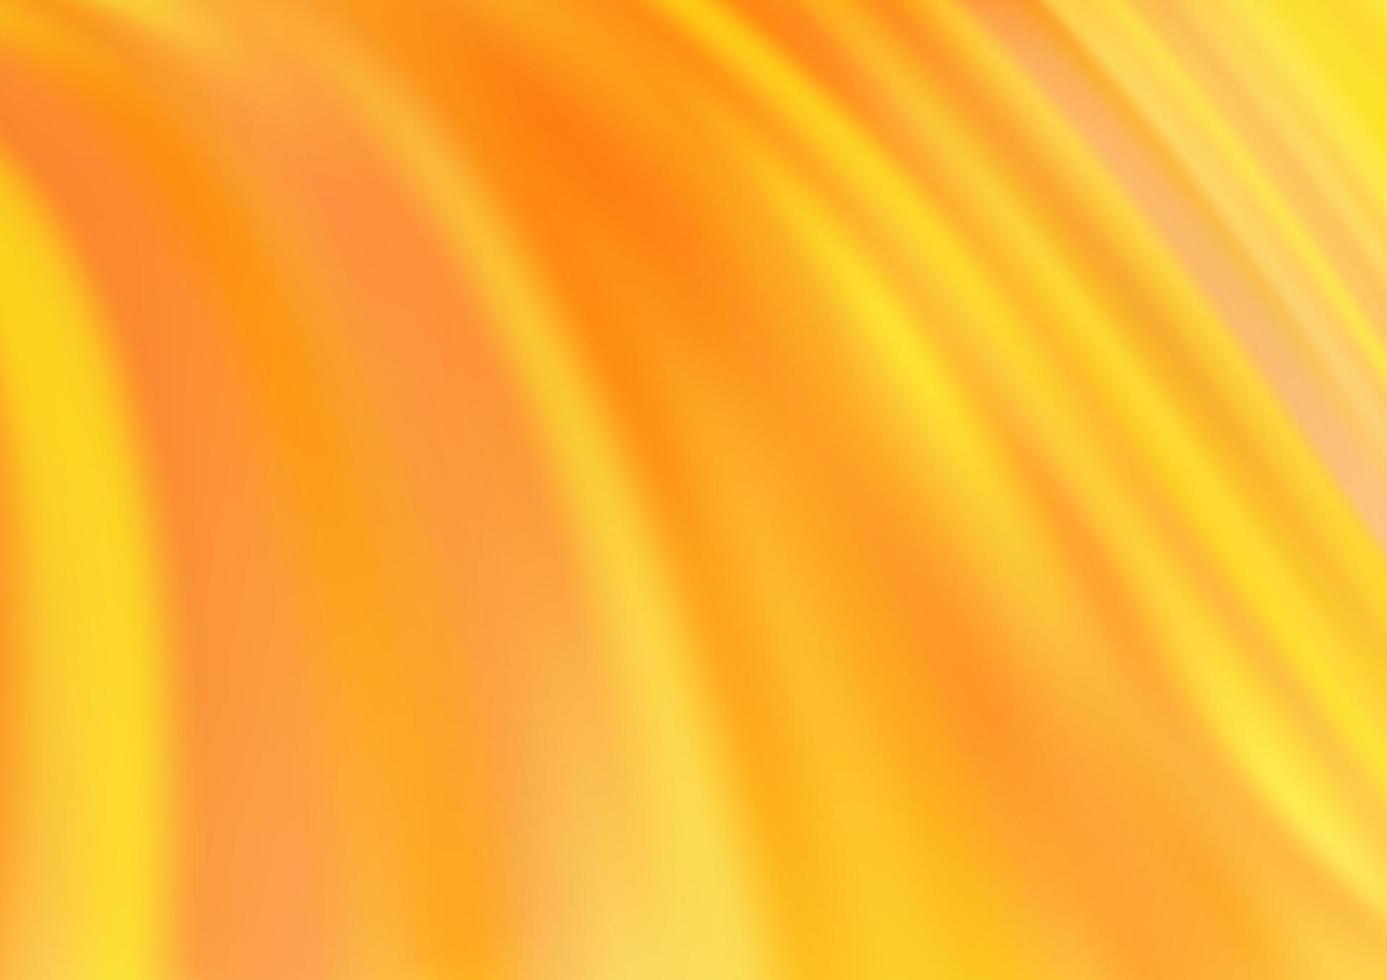 Light Orange vector pattern with liquid shapes.